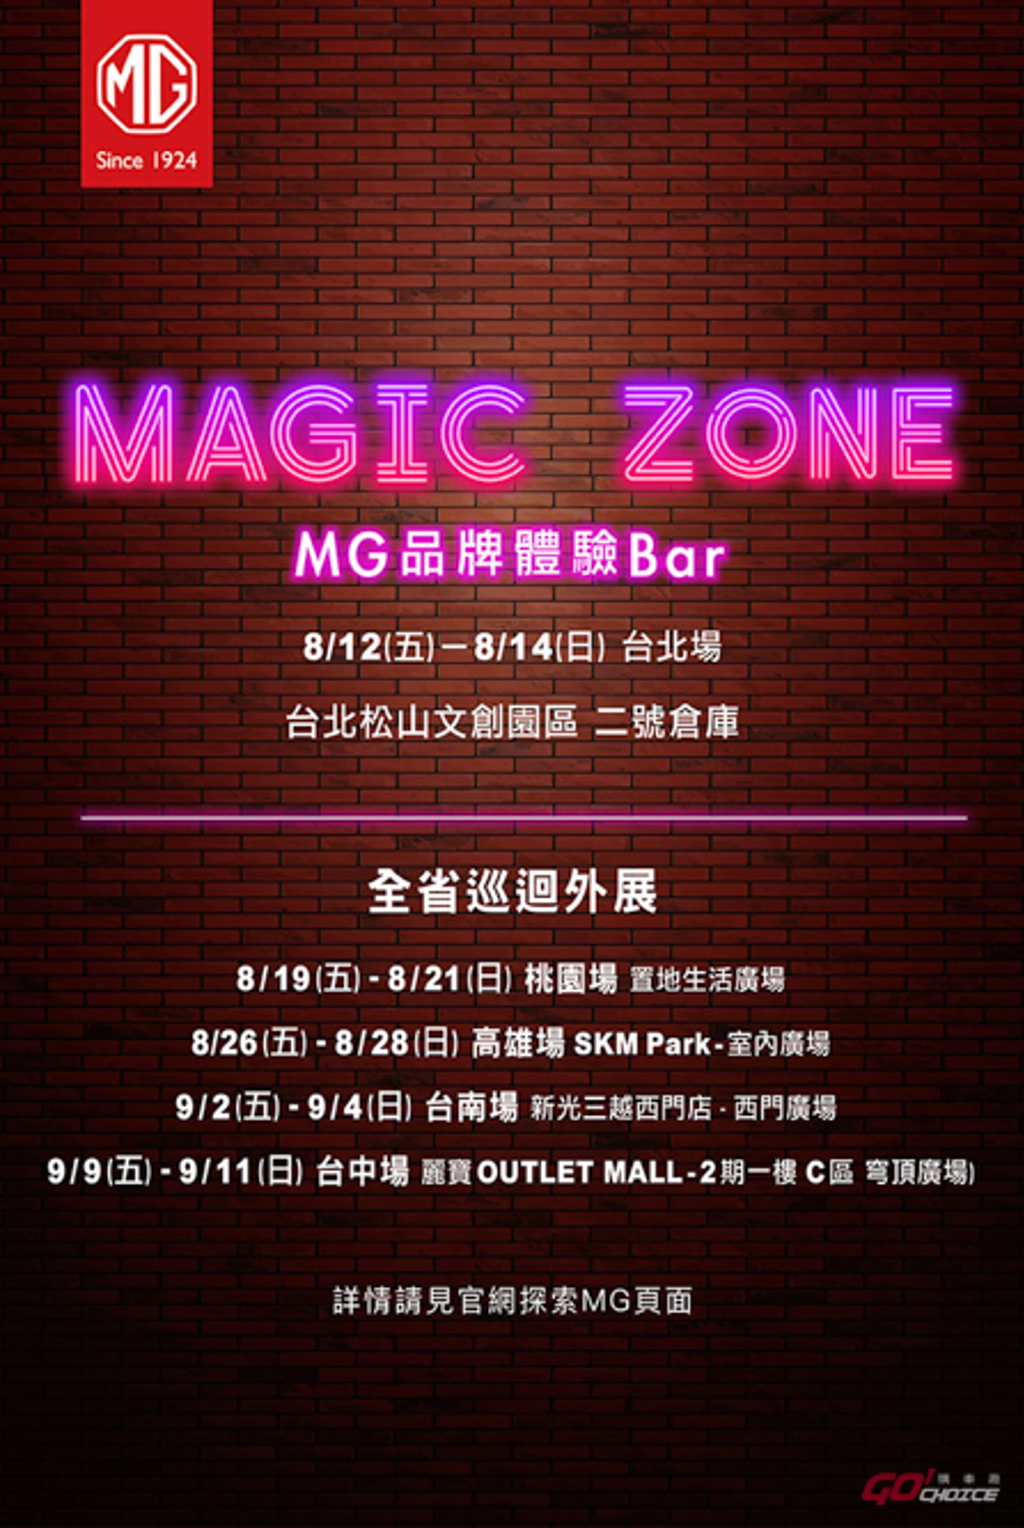 MG 全台首間品牌體驗 Bar 「MAGIC ZONE」快閃登場 (圖/GOCHOICE)